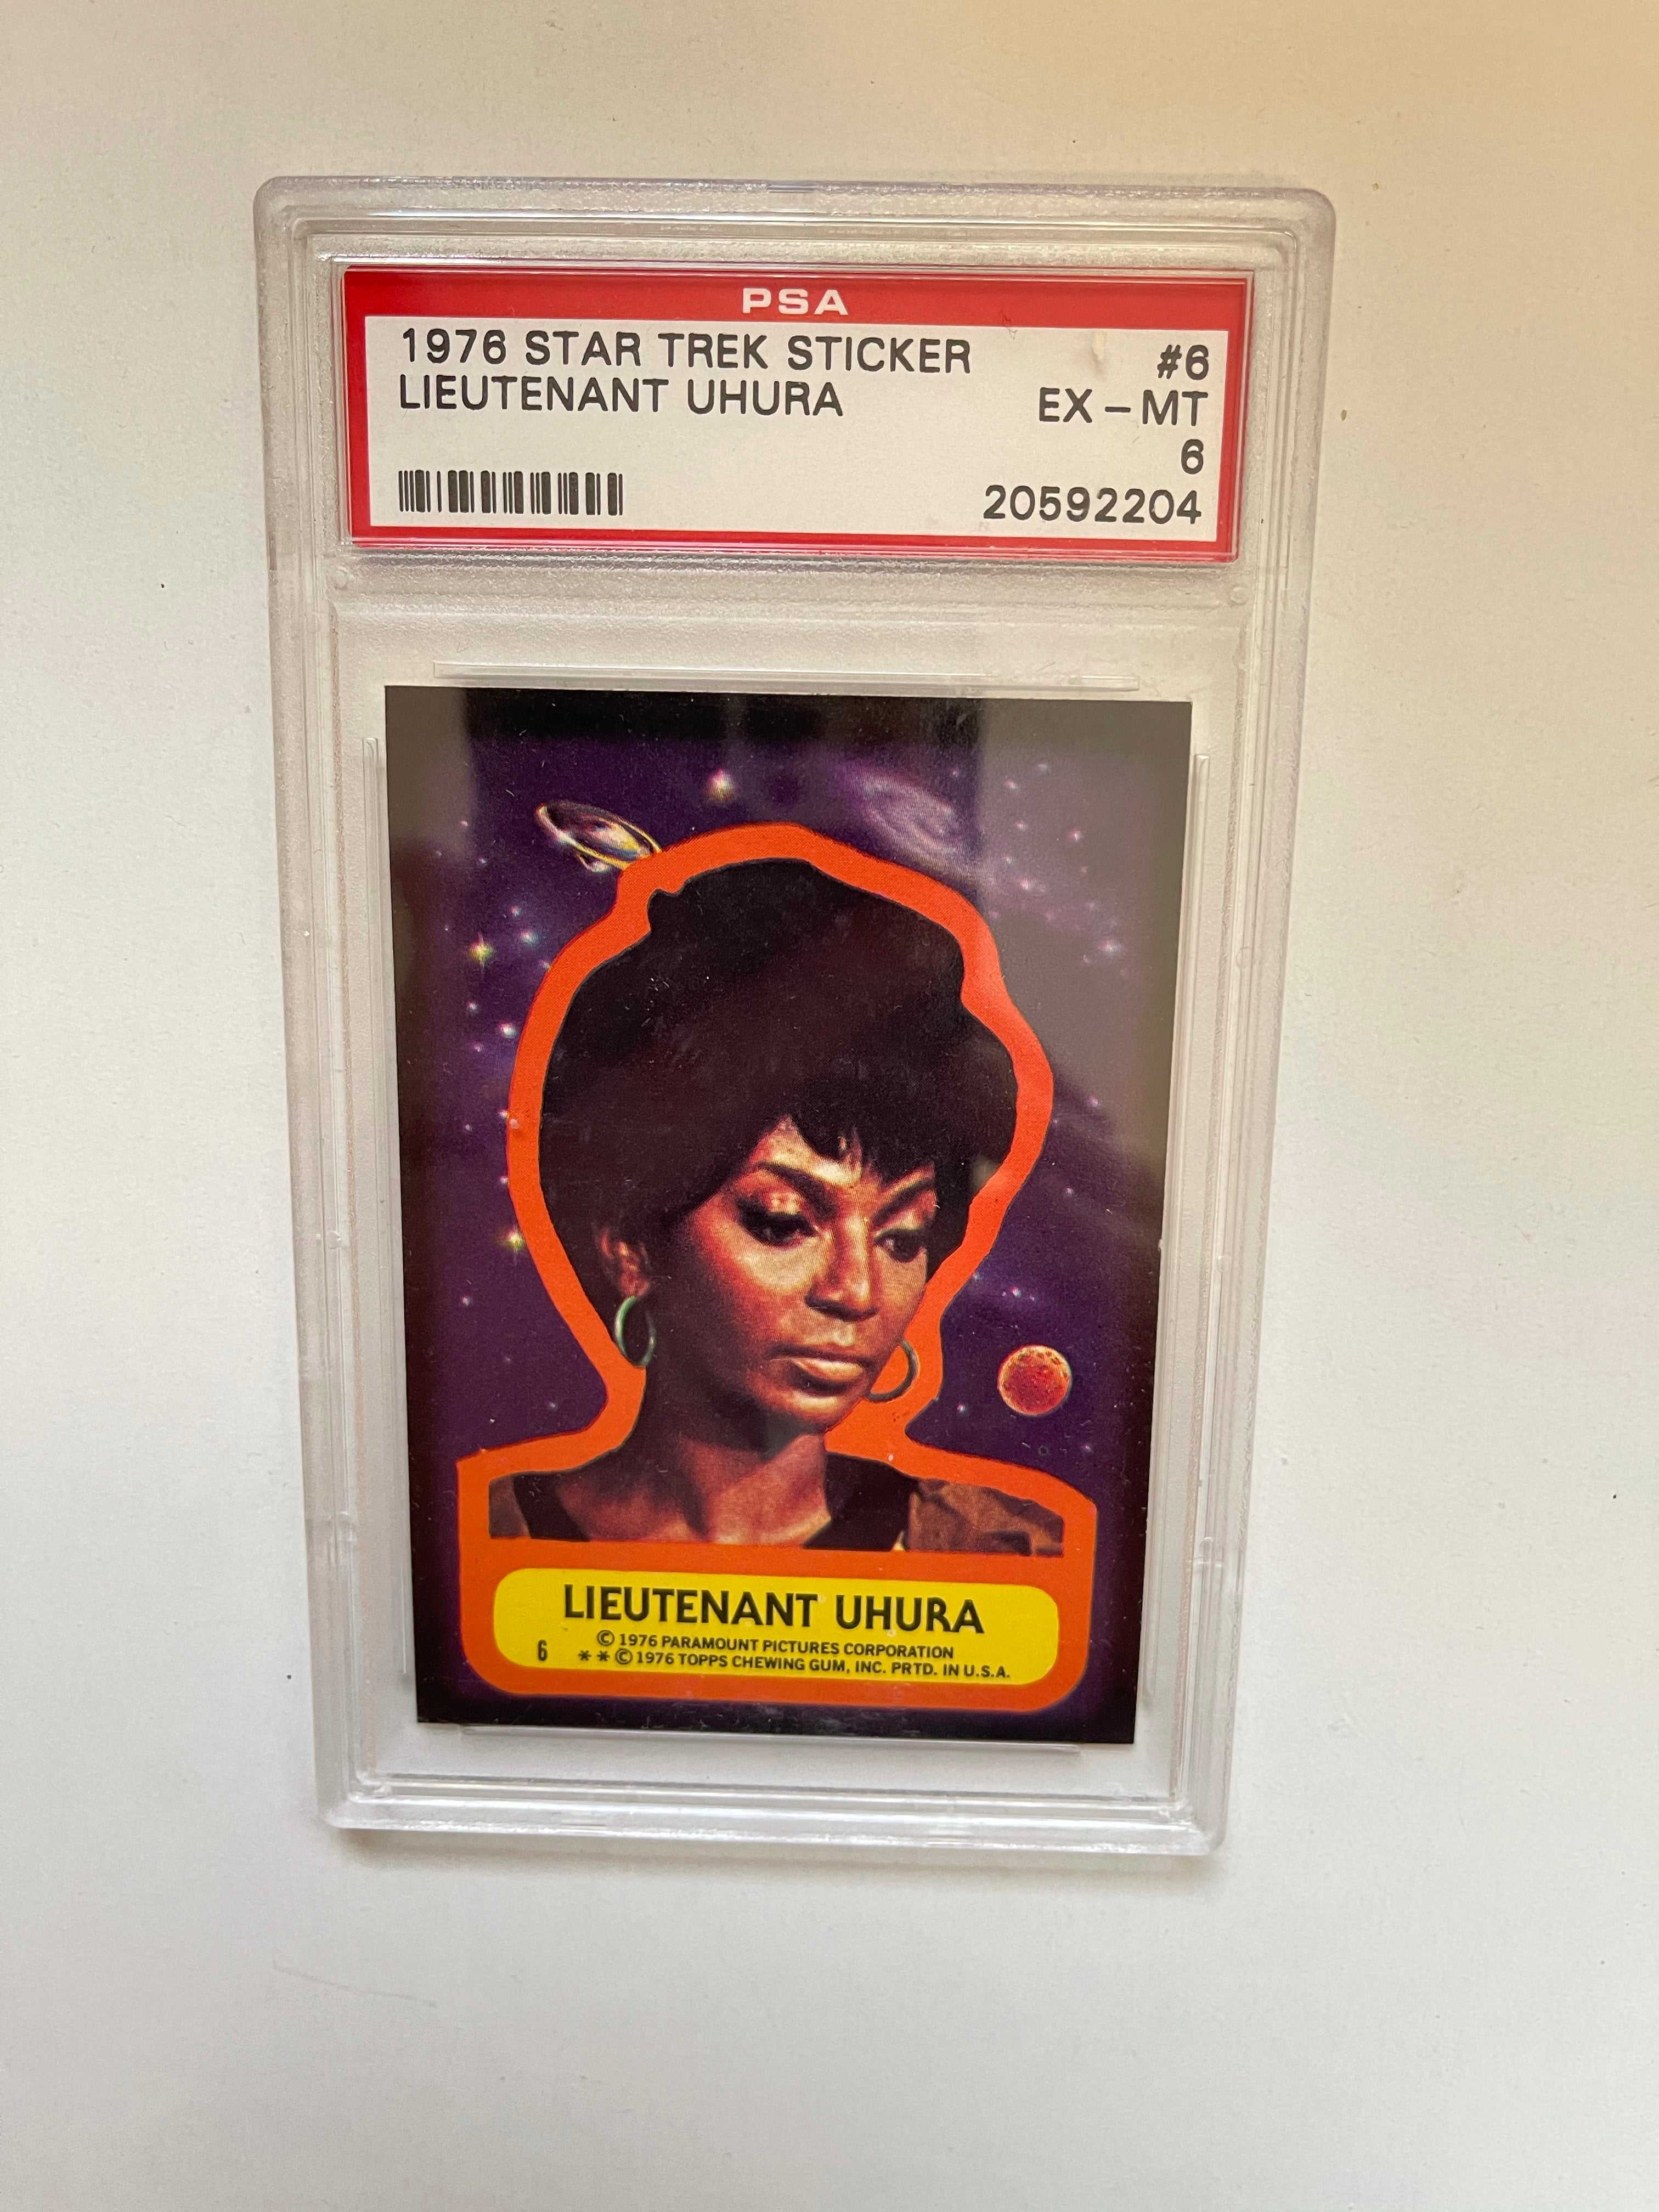 Star Trek Lieutenant Uhura PSA 6 Trek sticker 1976